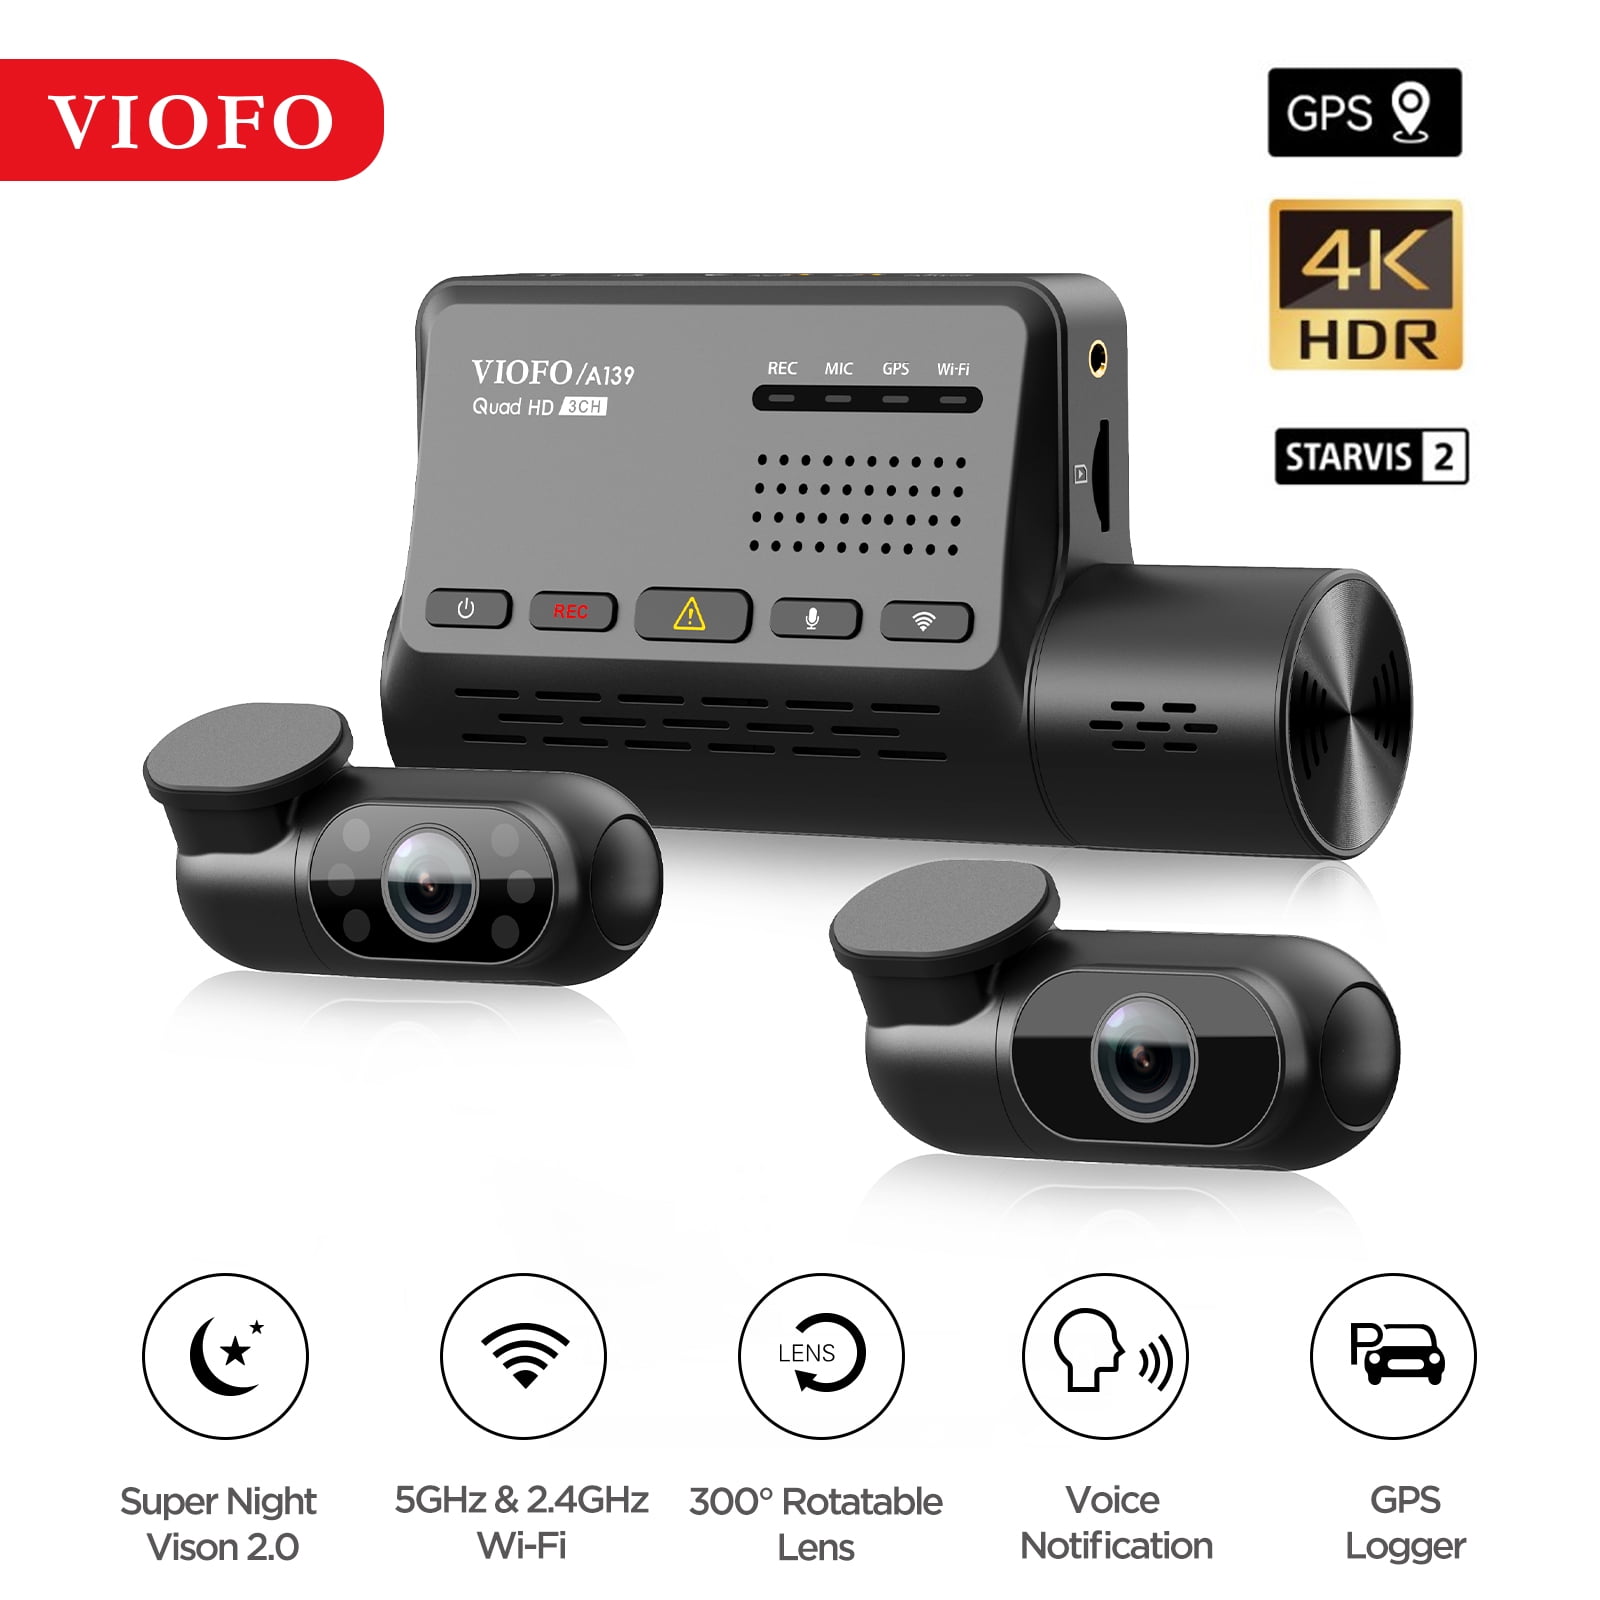 Viofo A139 PRO Review - Best Dash Cam? 4K Starvis 2 Sensor 